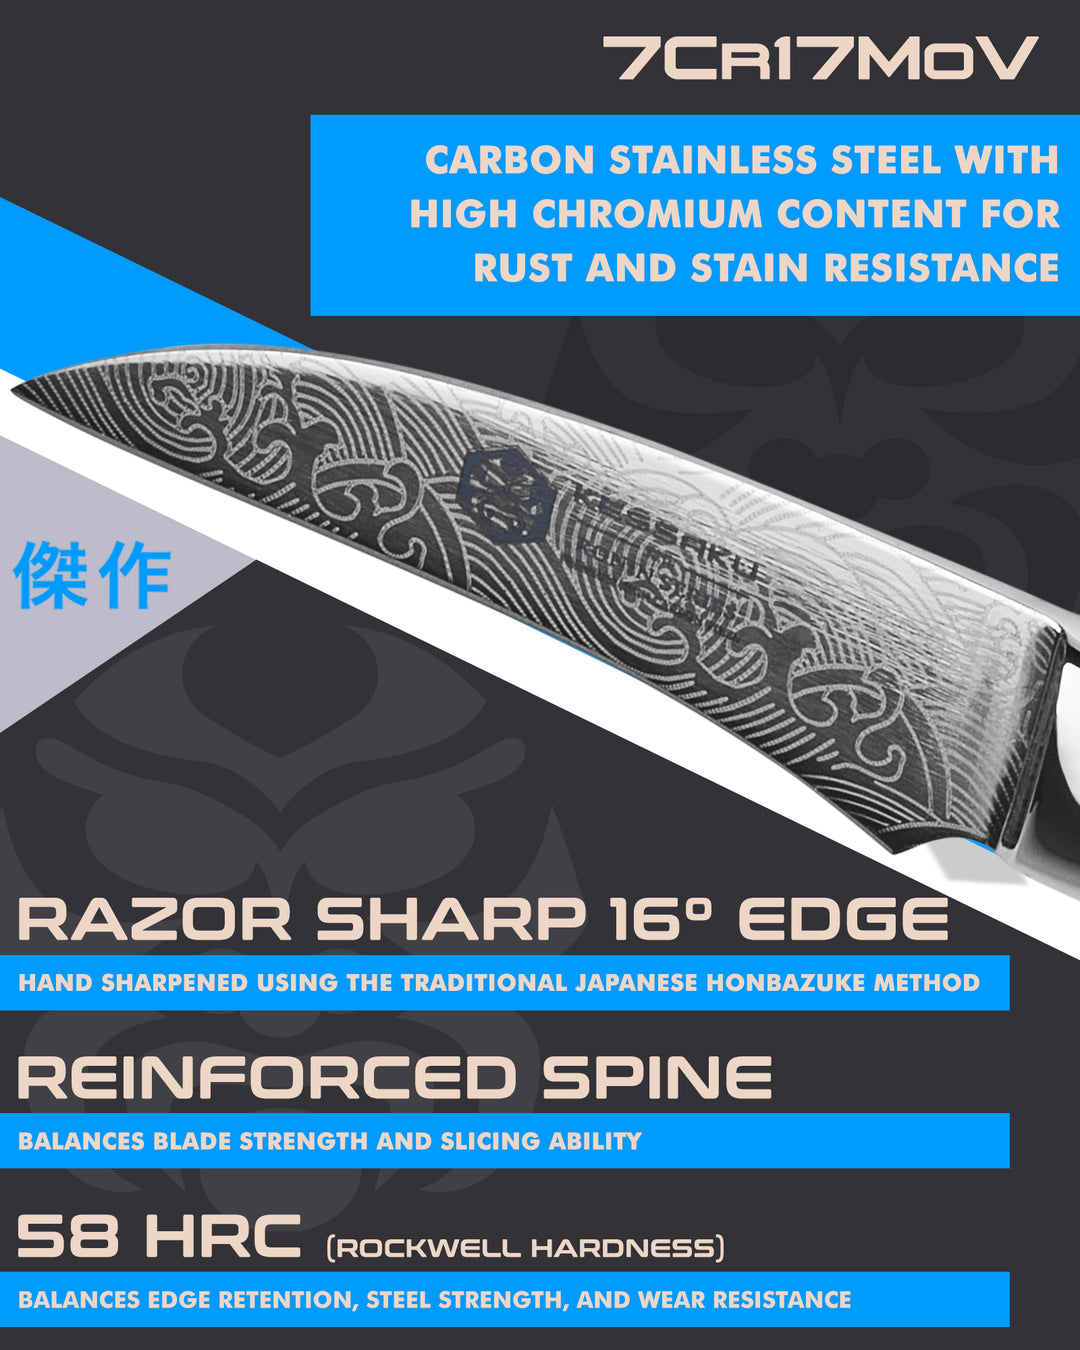 Kessaku Ronin Tourne Knife blade features: 7Cr17MoV steel, 58 HRC, 16 degree edge, reinforced spine